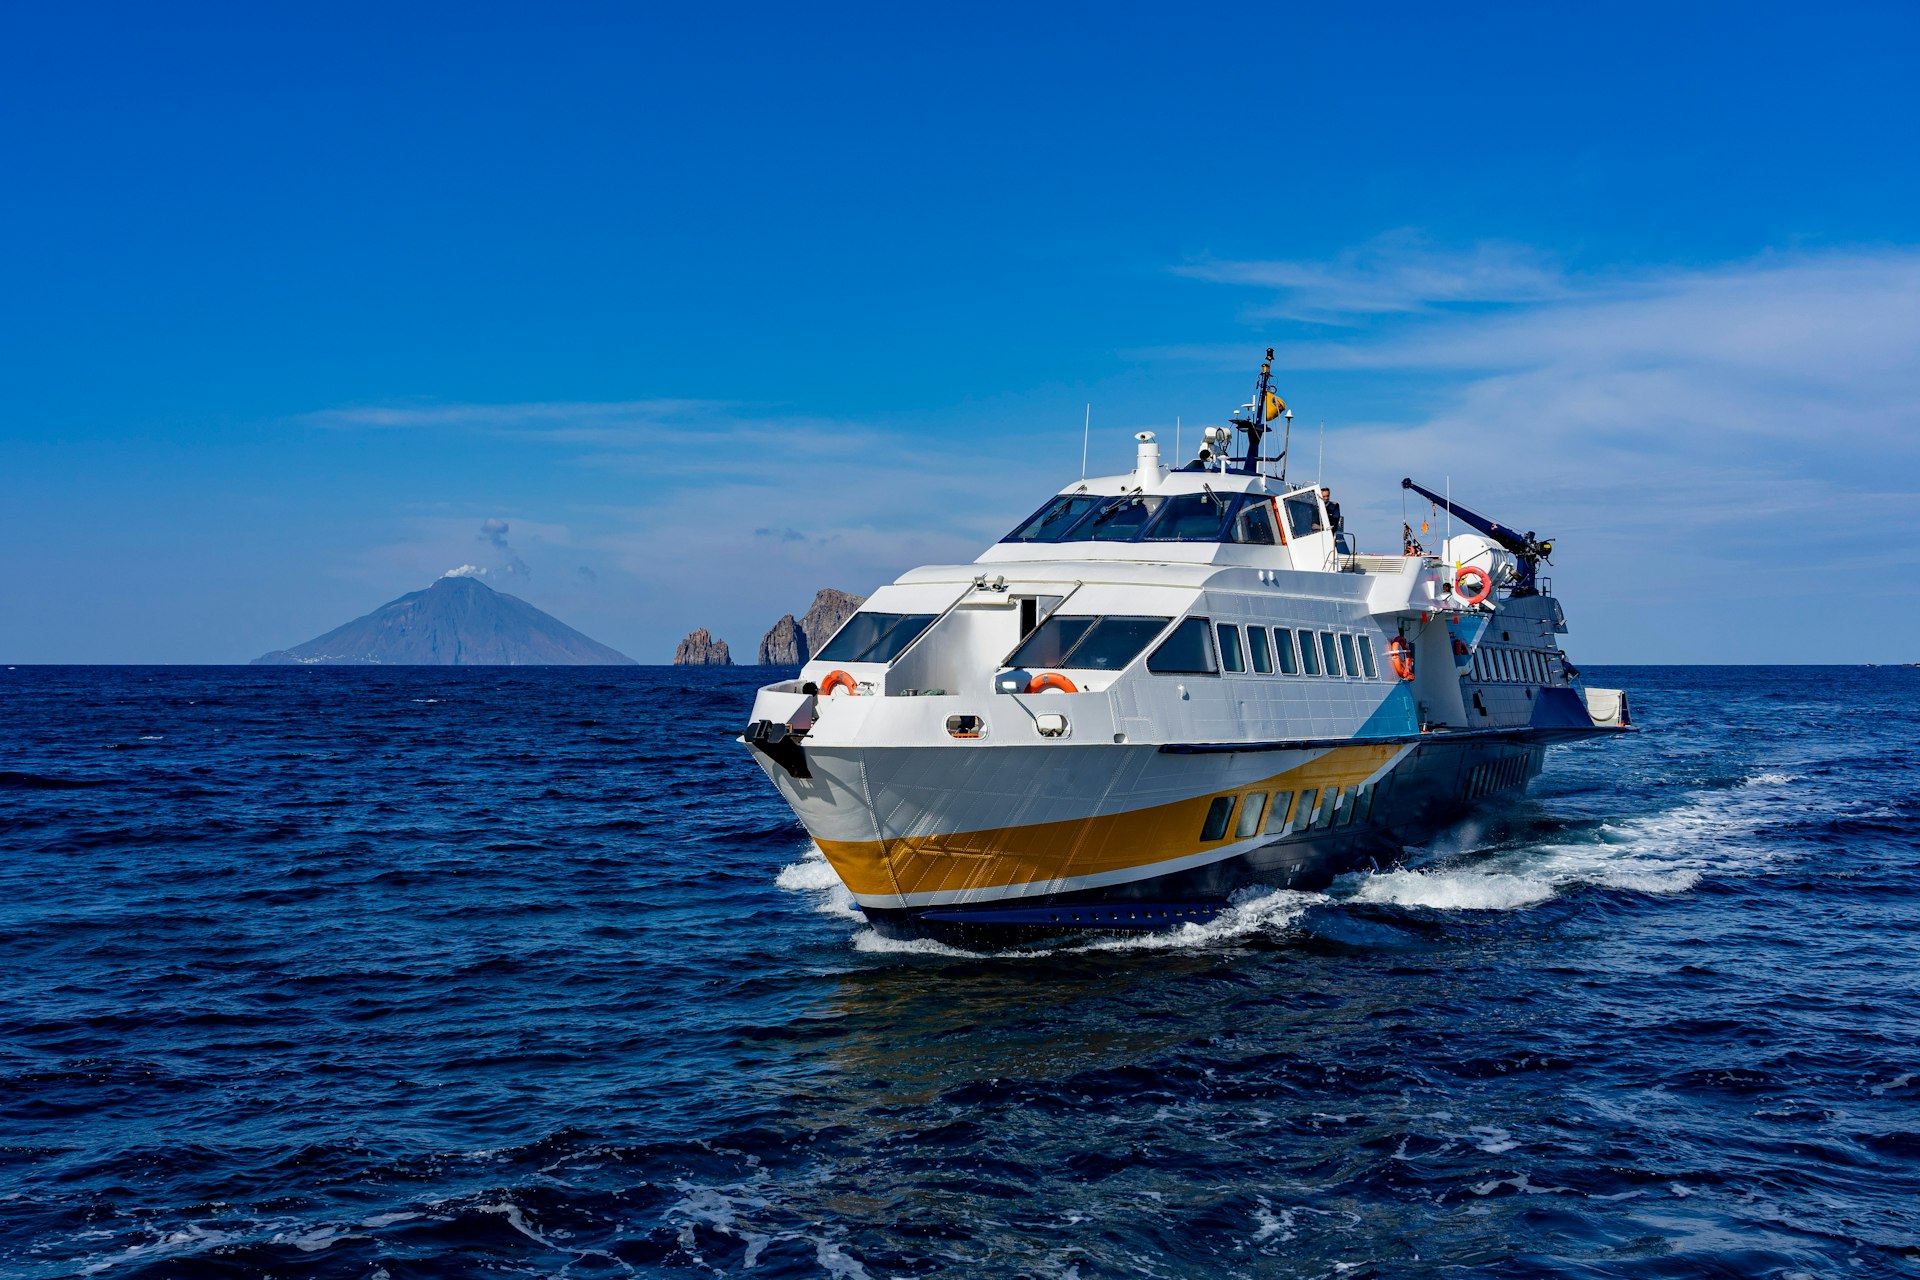 A fast ferry in the water near Lipari, Aeolian Islands, Italy